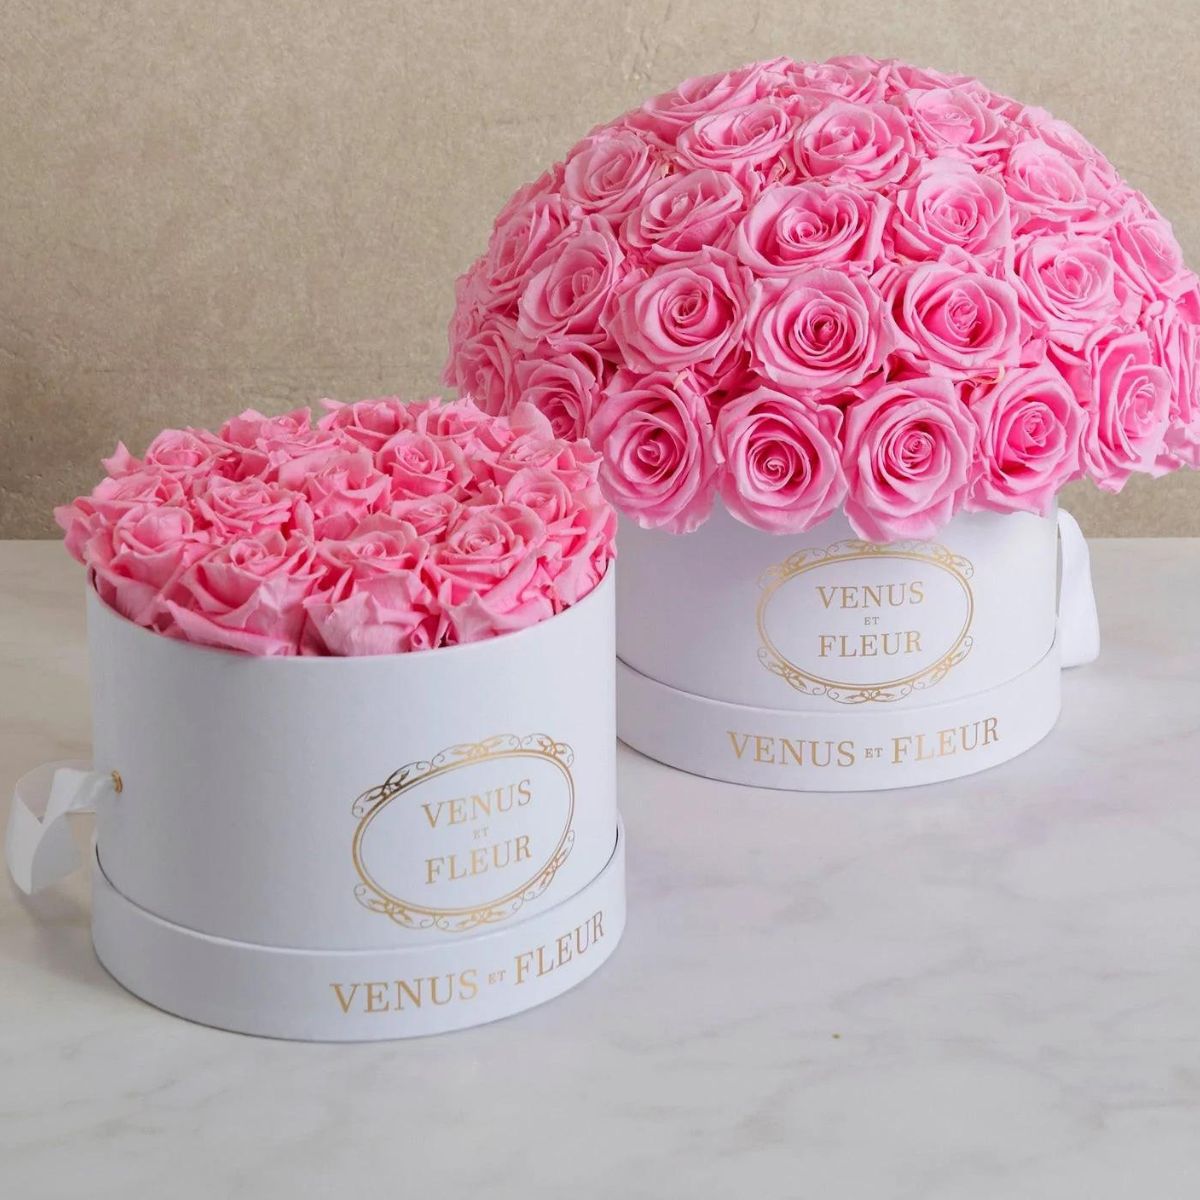 Pink Roses: Origin, Meaning, And Symbolism - Venus Et Fleur®